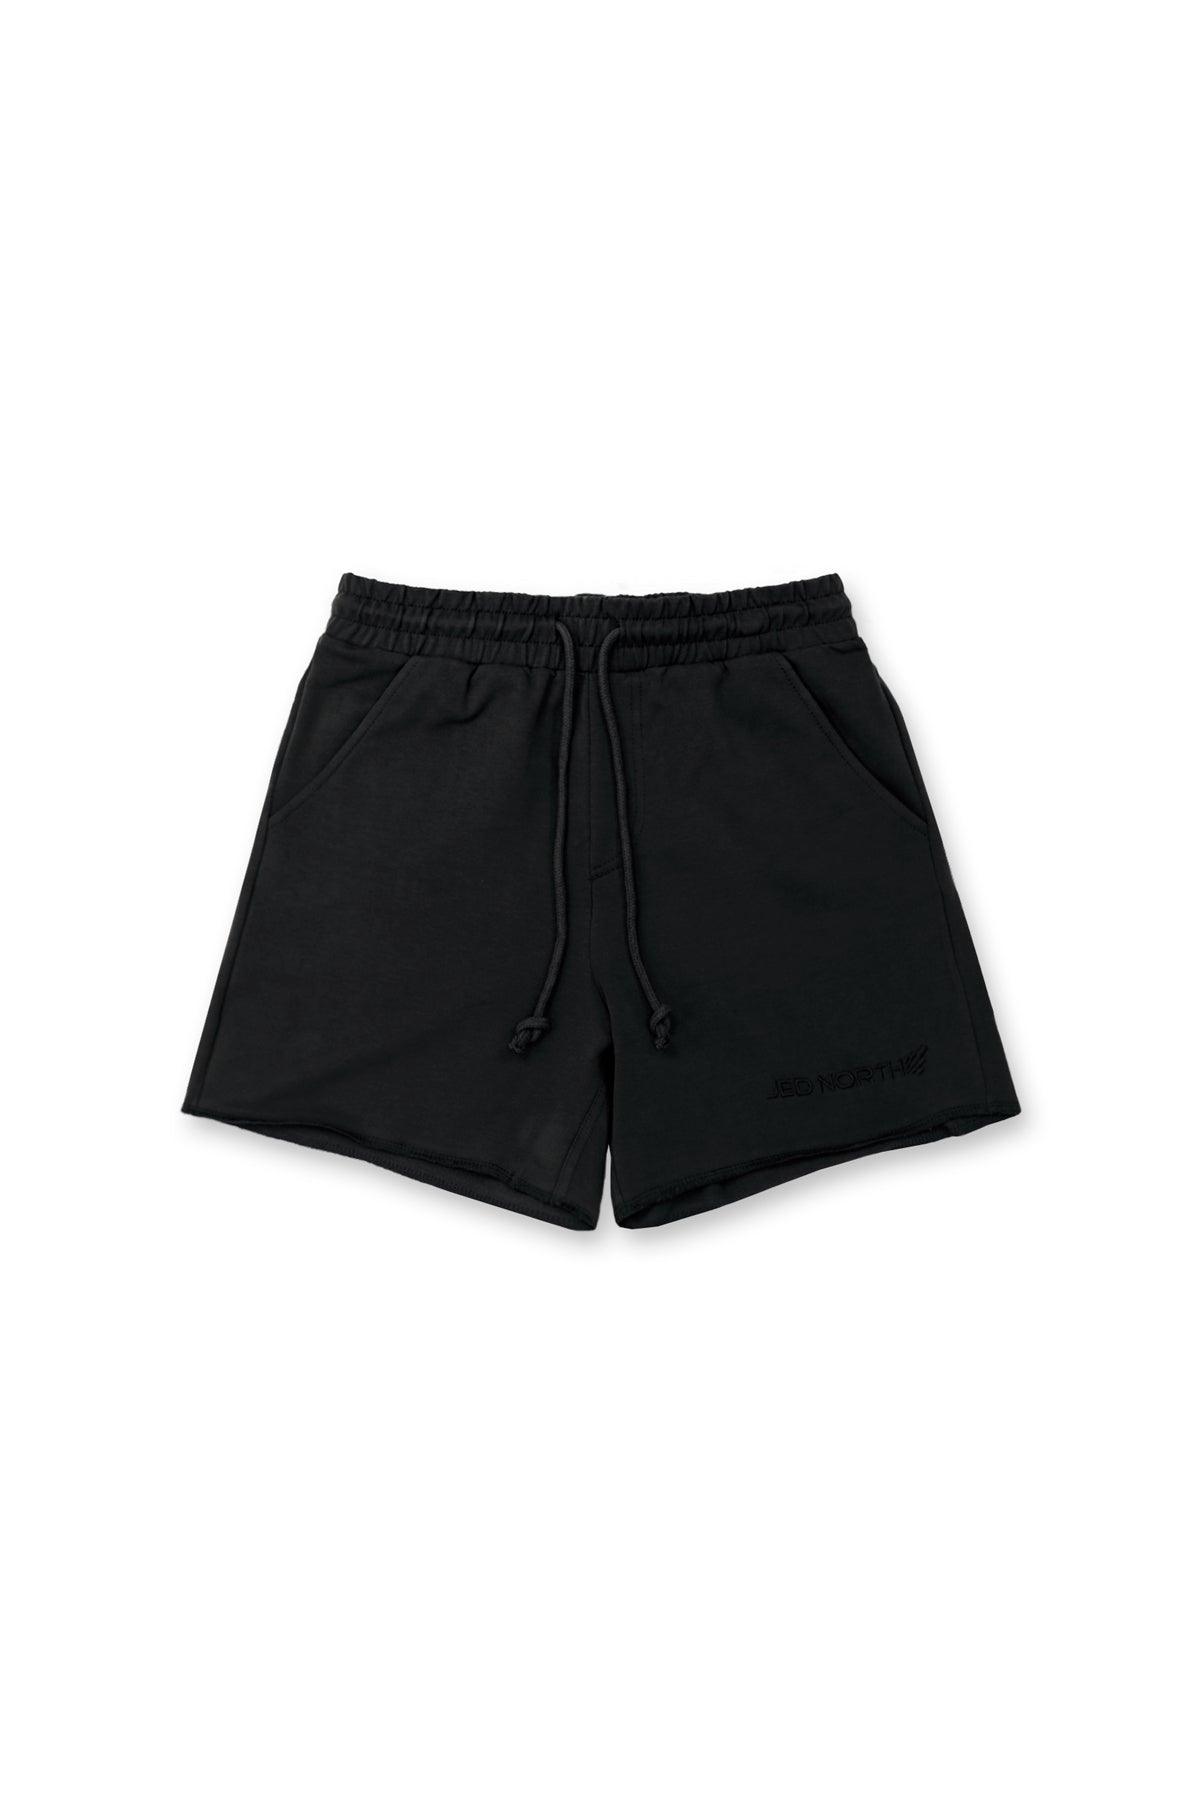 Motion 5'' Varsity Sweat Shorts - Black - Jed North